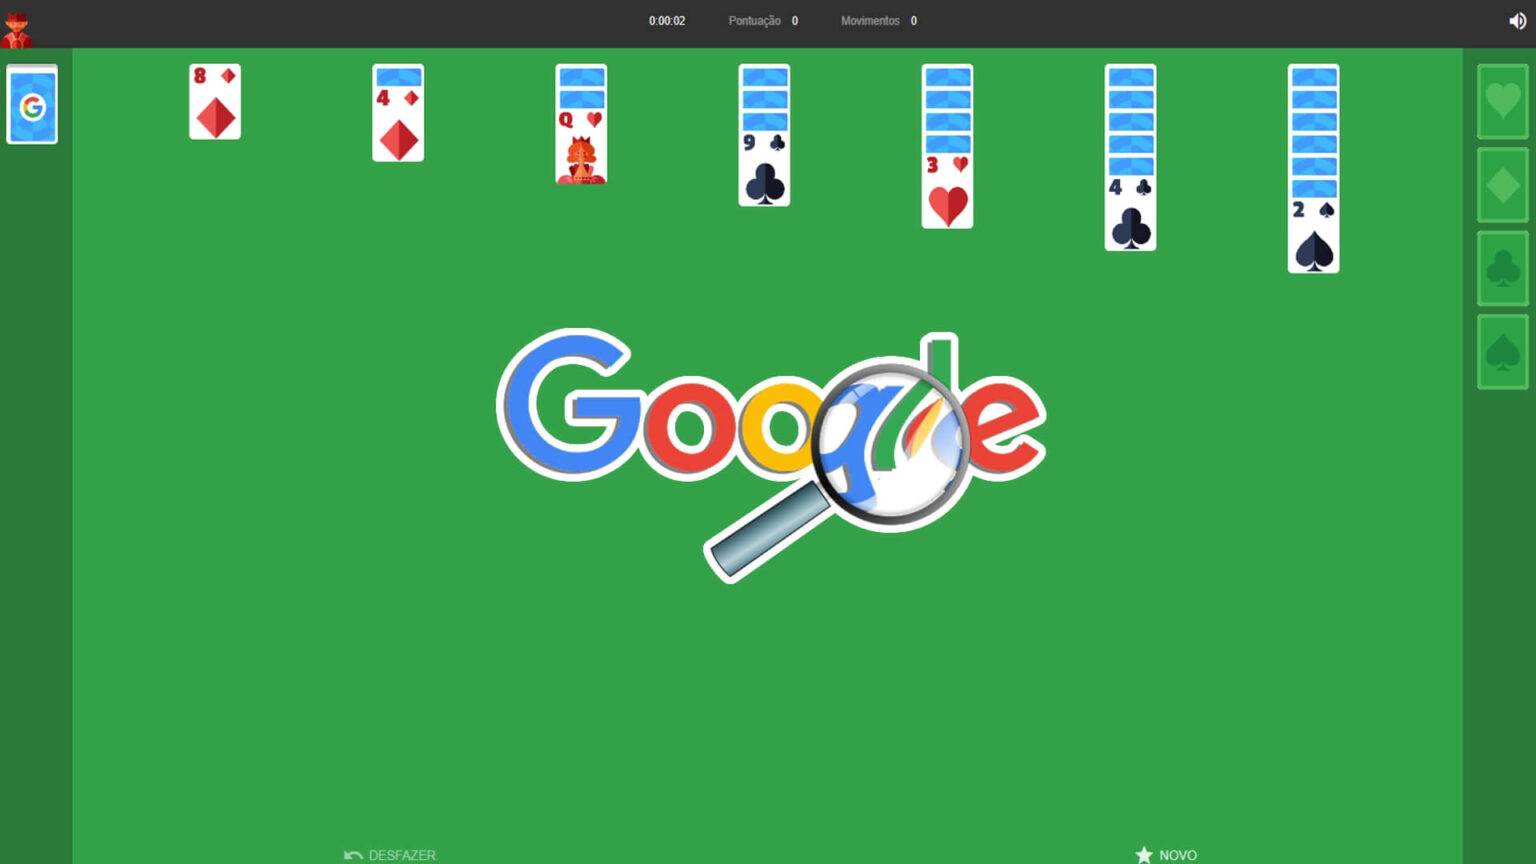 Jogos do Google escondidos: como achar e jogar